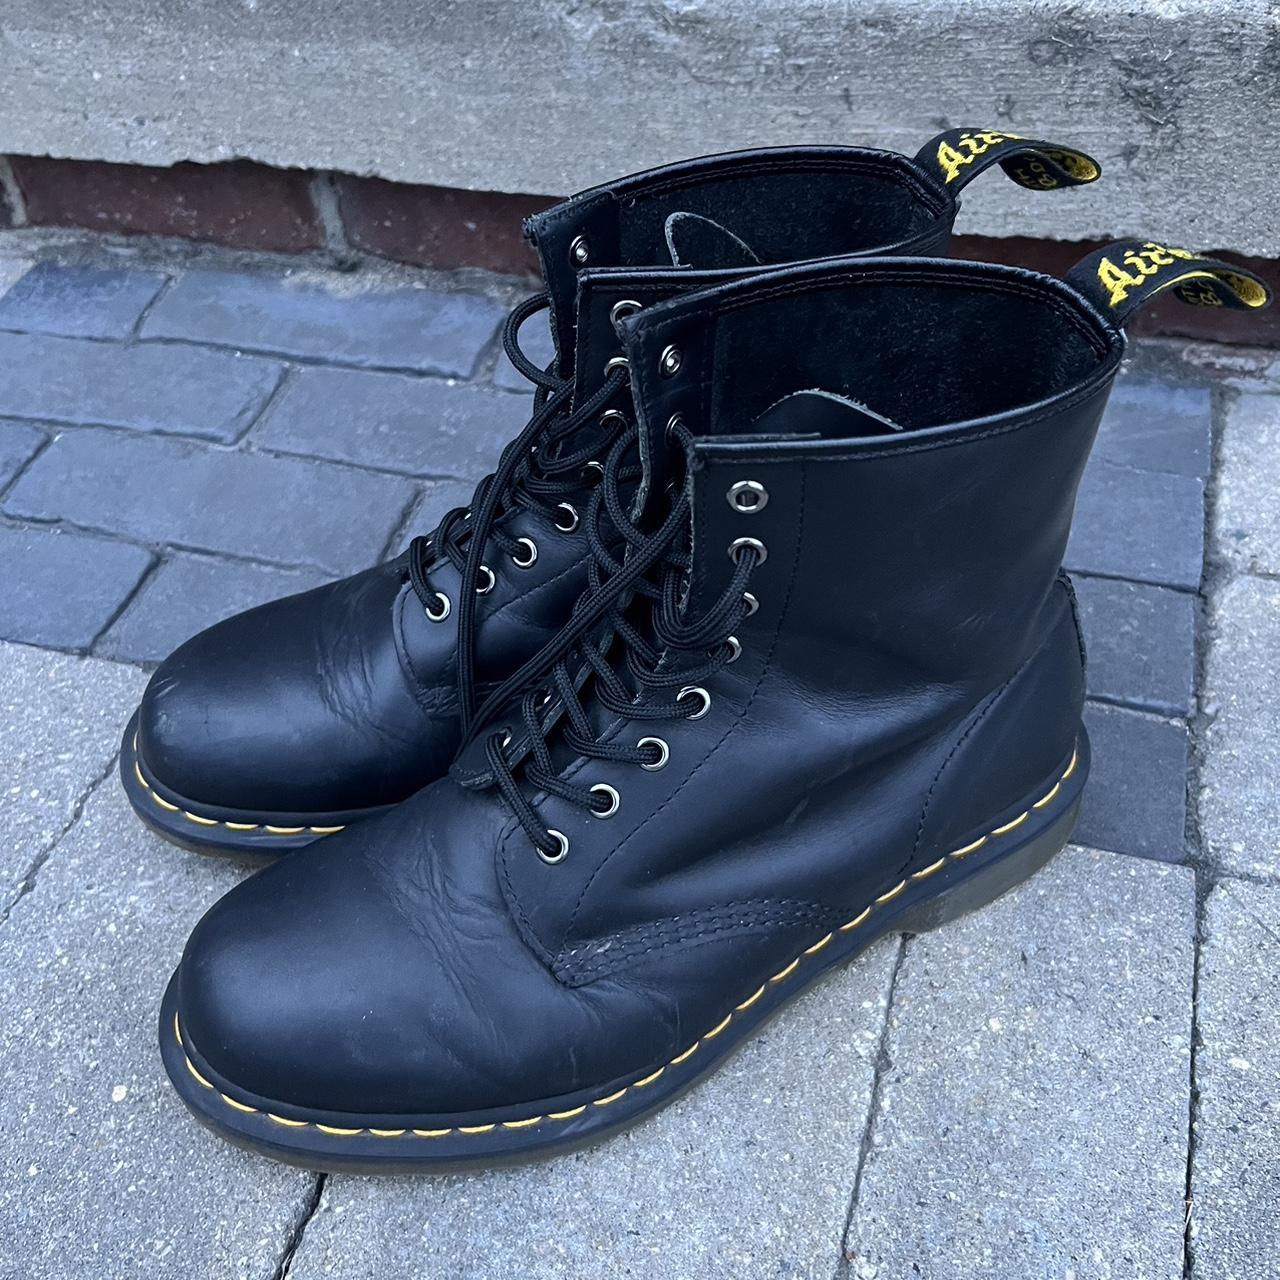 Doc Martens 1460 black leather lace-up boots Size... - Depop